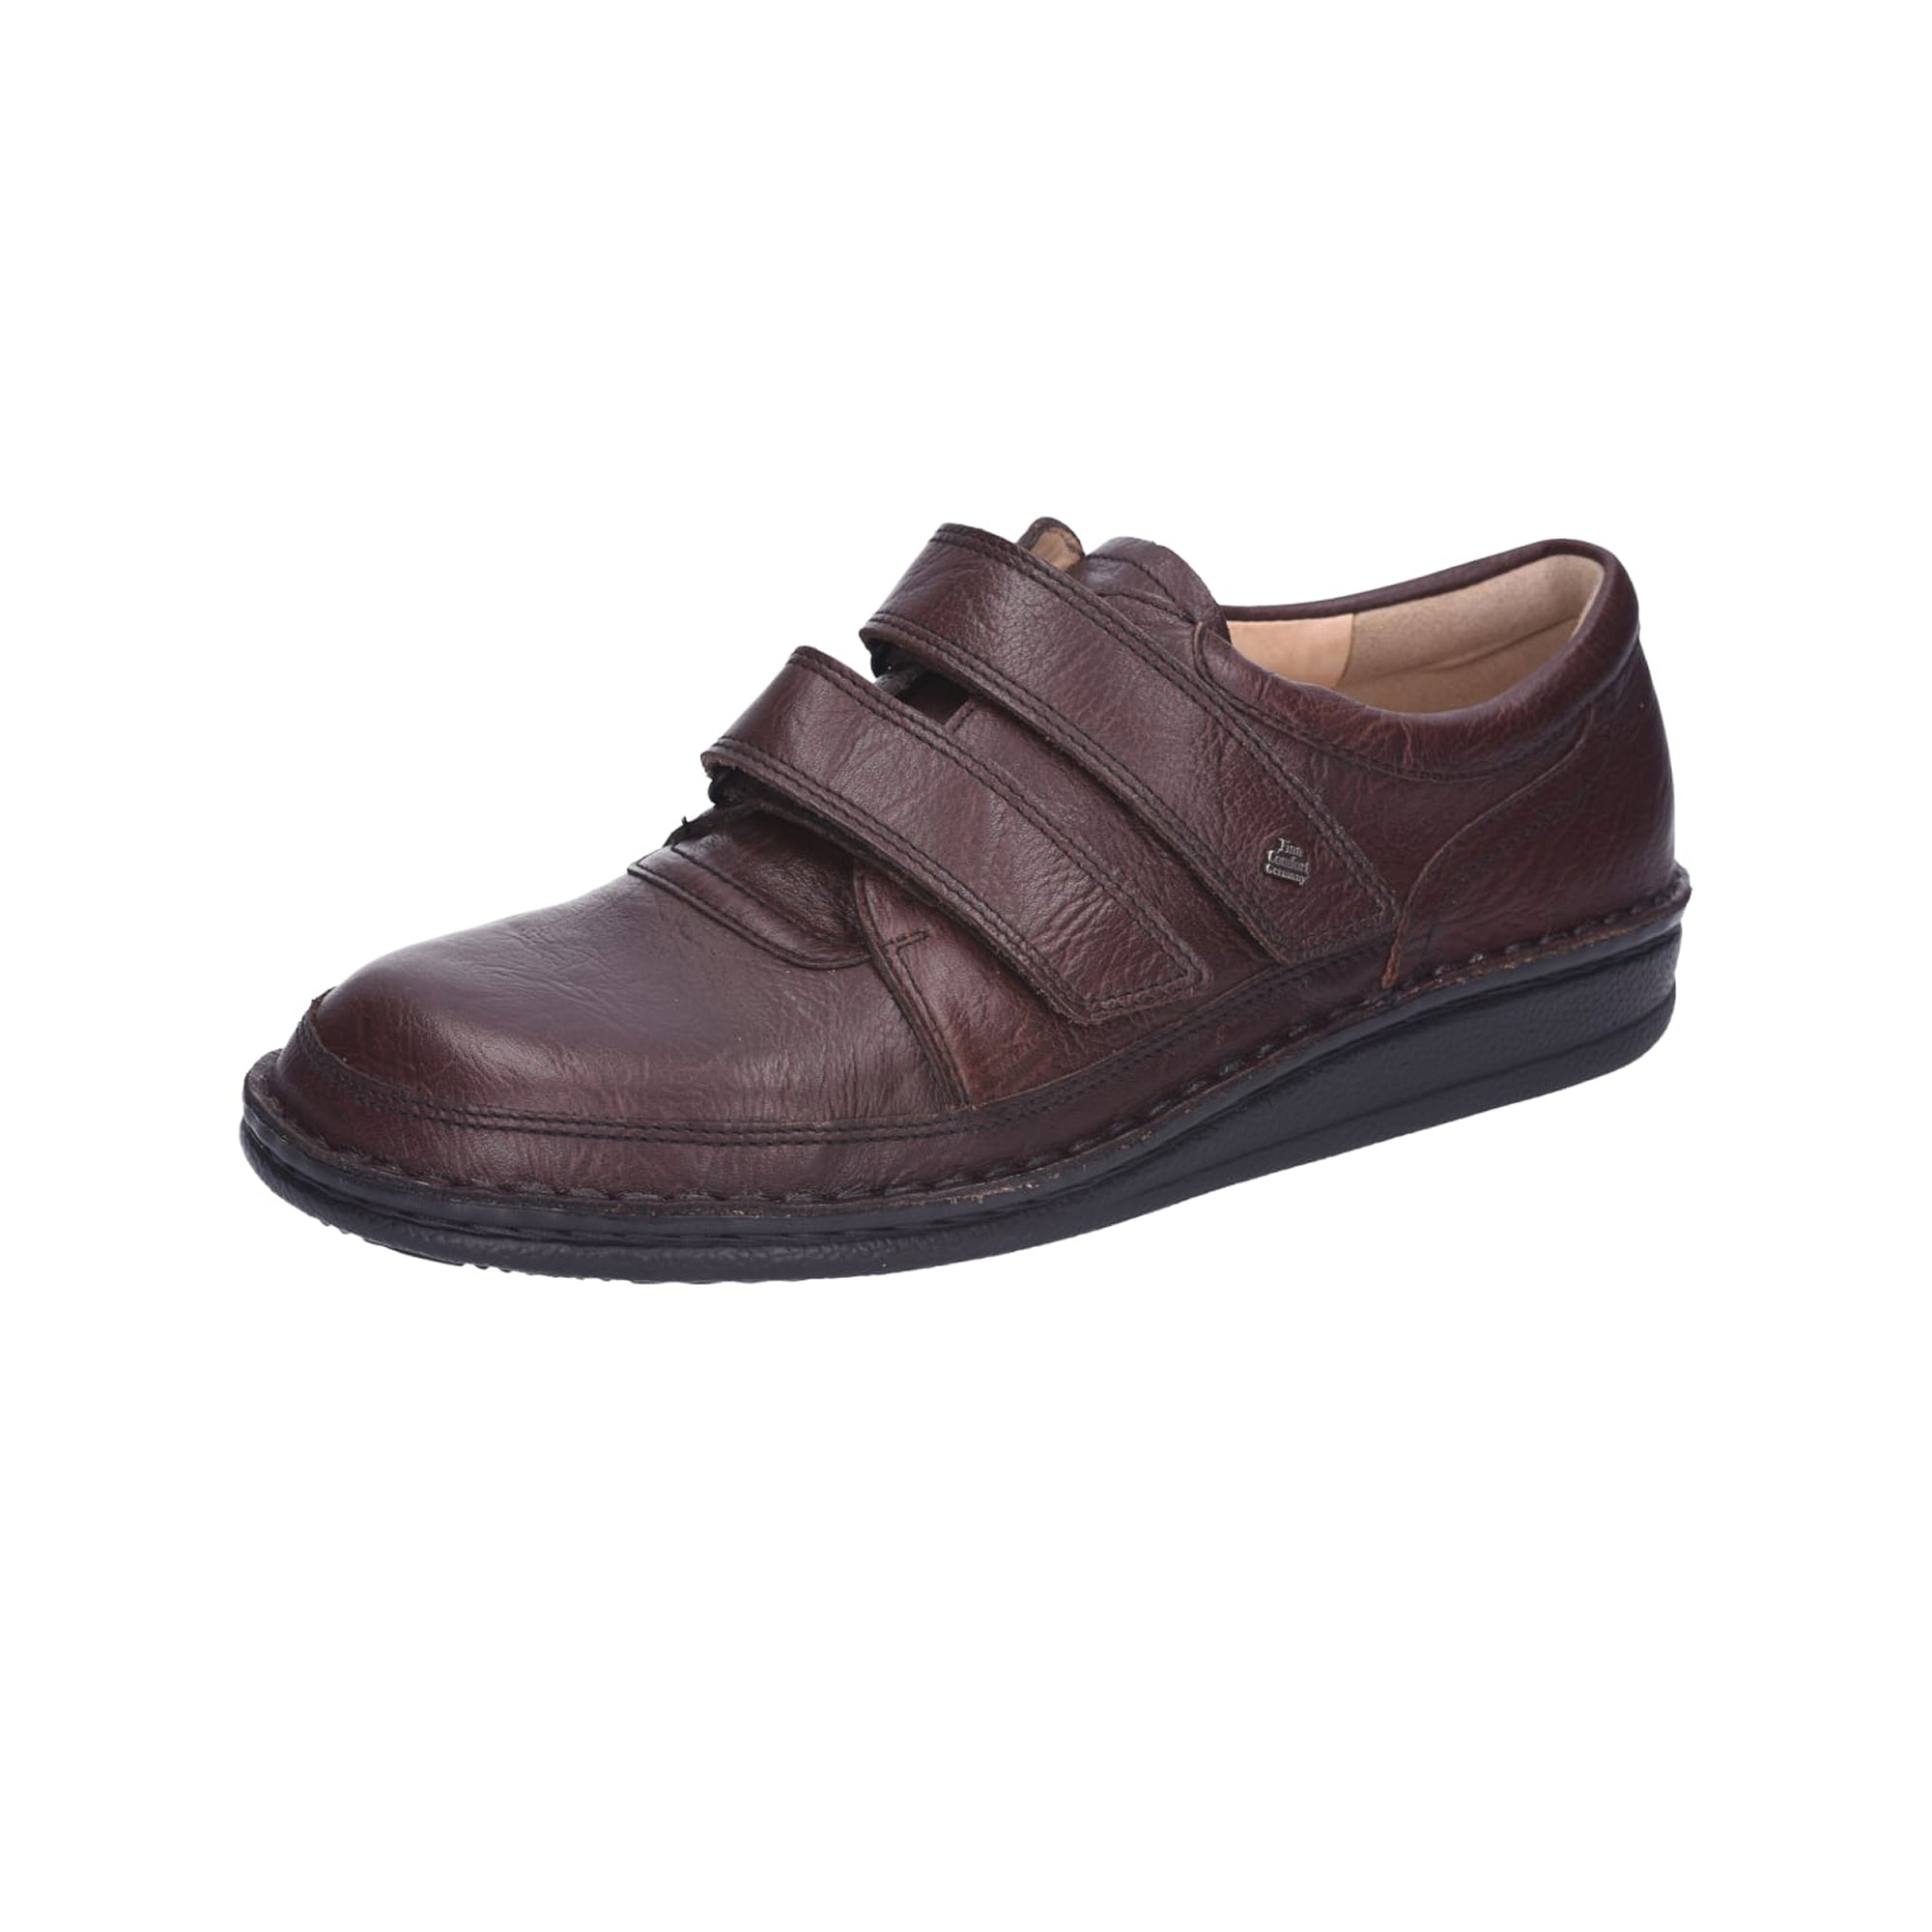 Finn Comfort Köln Men's Comfort Shoes in Brown - Stylish & Durable